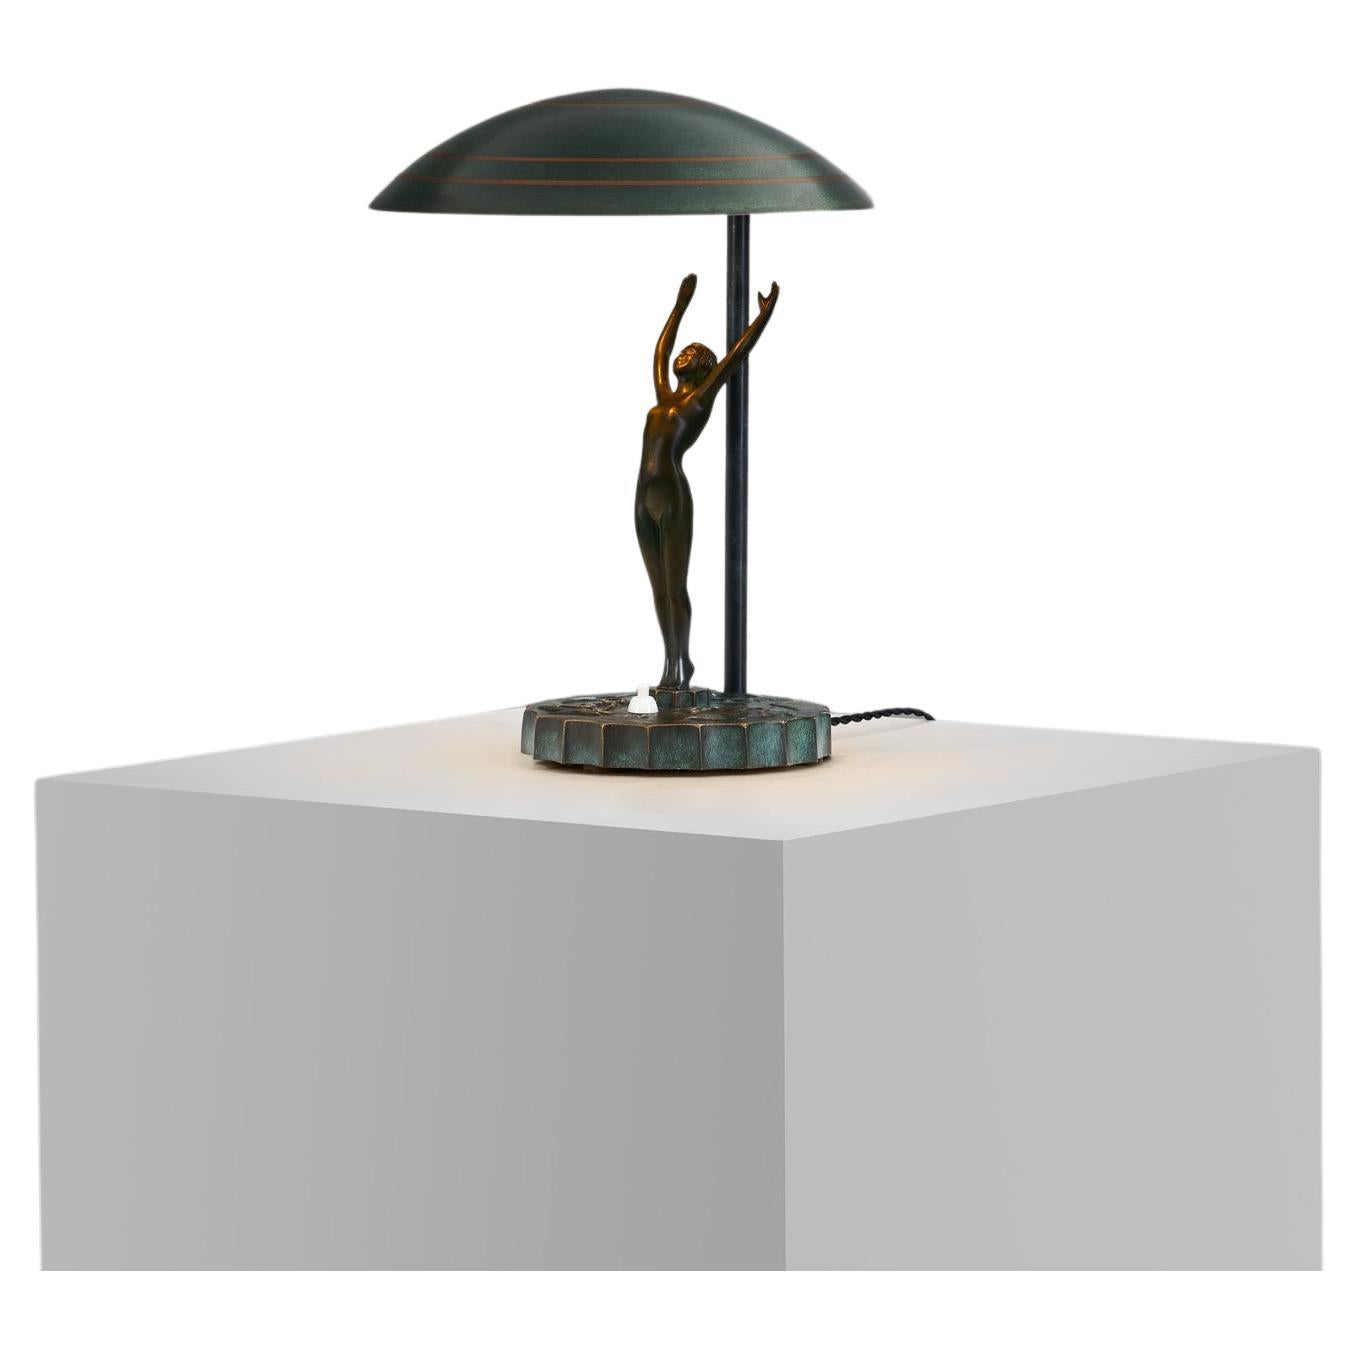 Bronze Art Deco Table Lamp, Europe ca 1930s